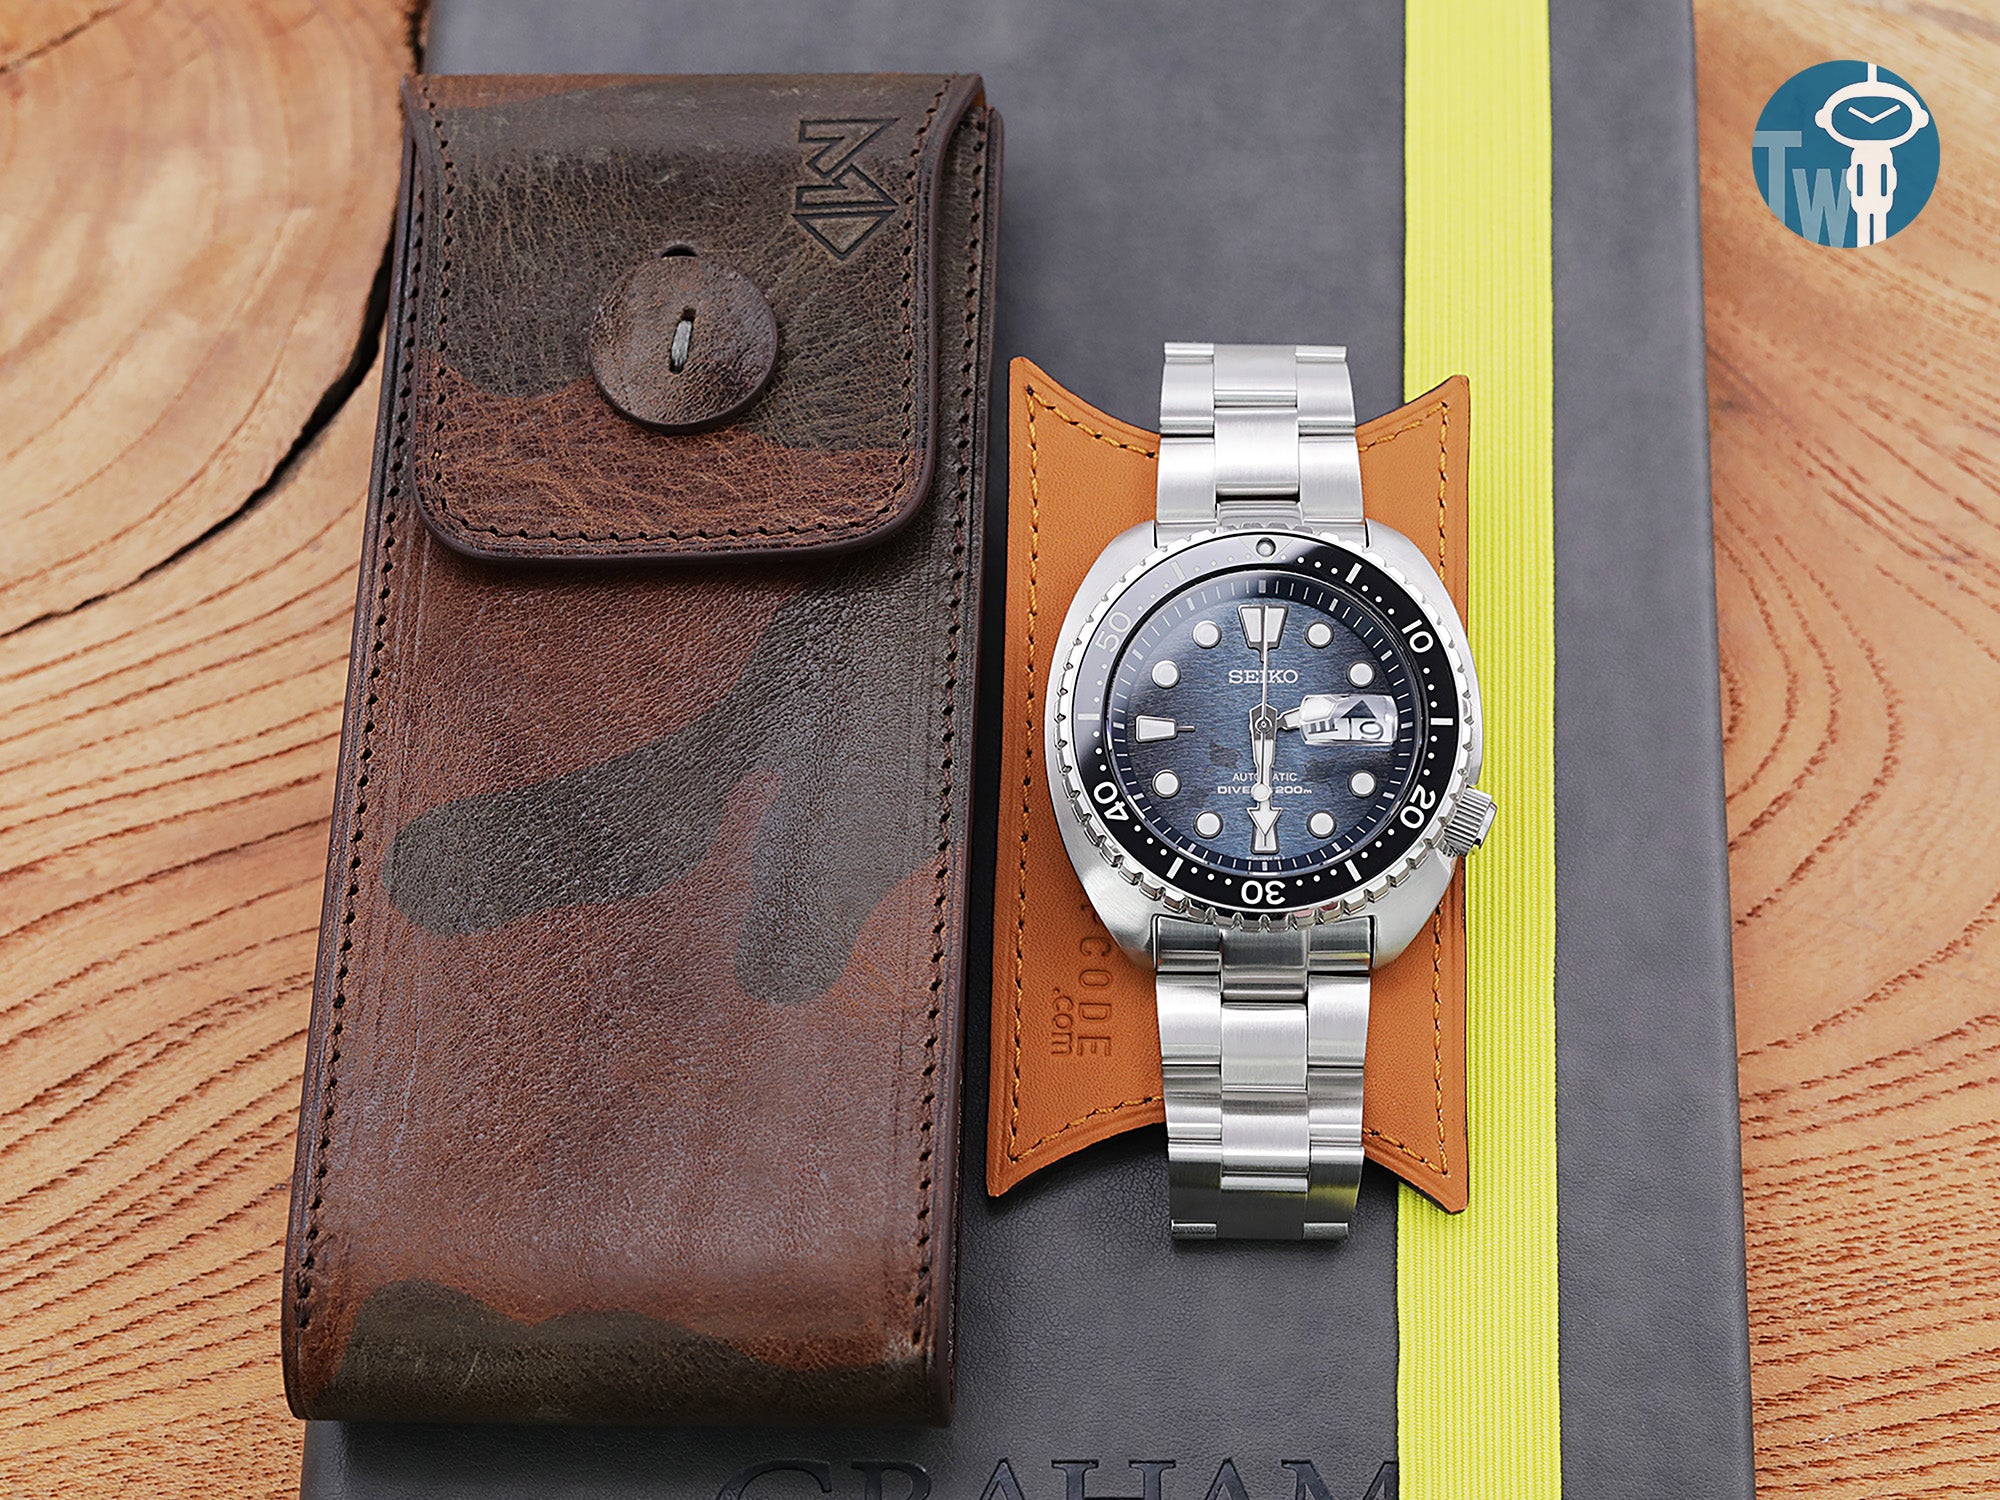 MT-3 意大利迷彩圖案皮革 腕錶收納袋 旅行單只錶包 可擕式手錶保護袋, 小號